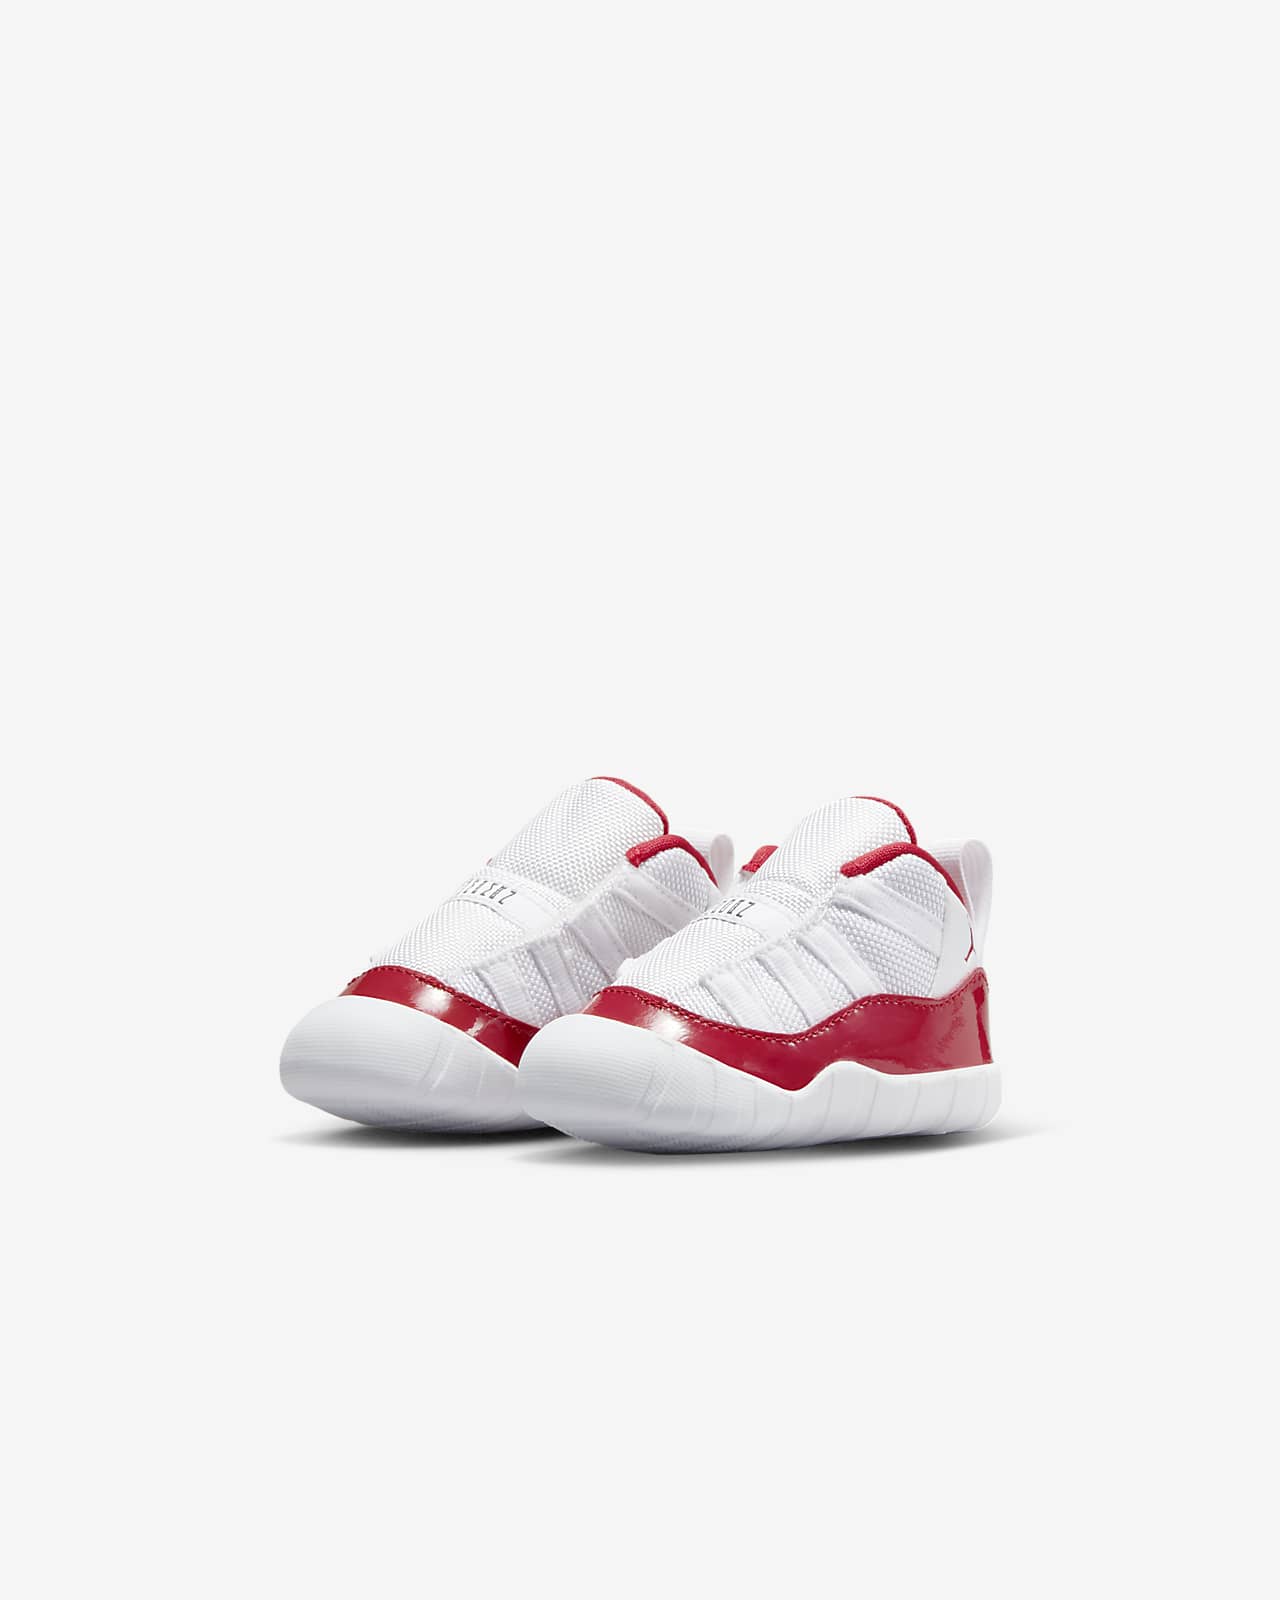 Jordan 11 Crib Bootie. Nike.com